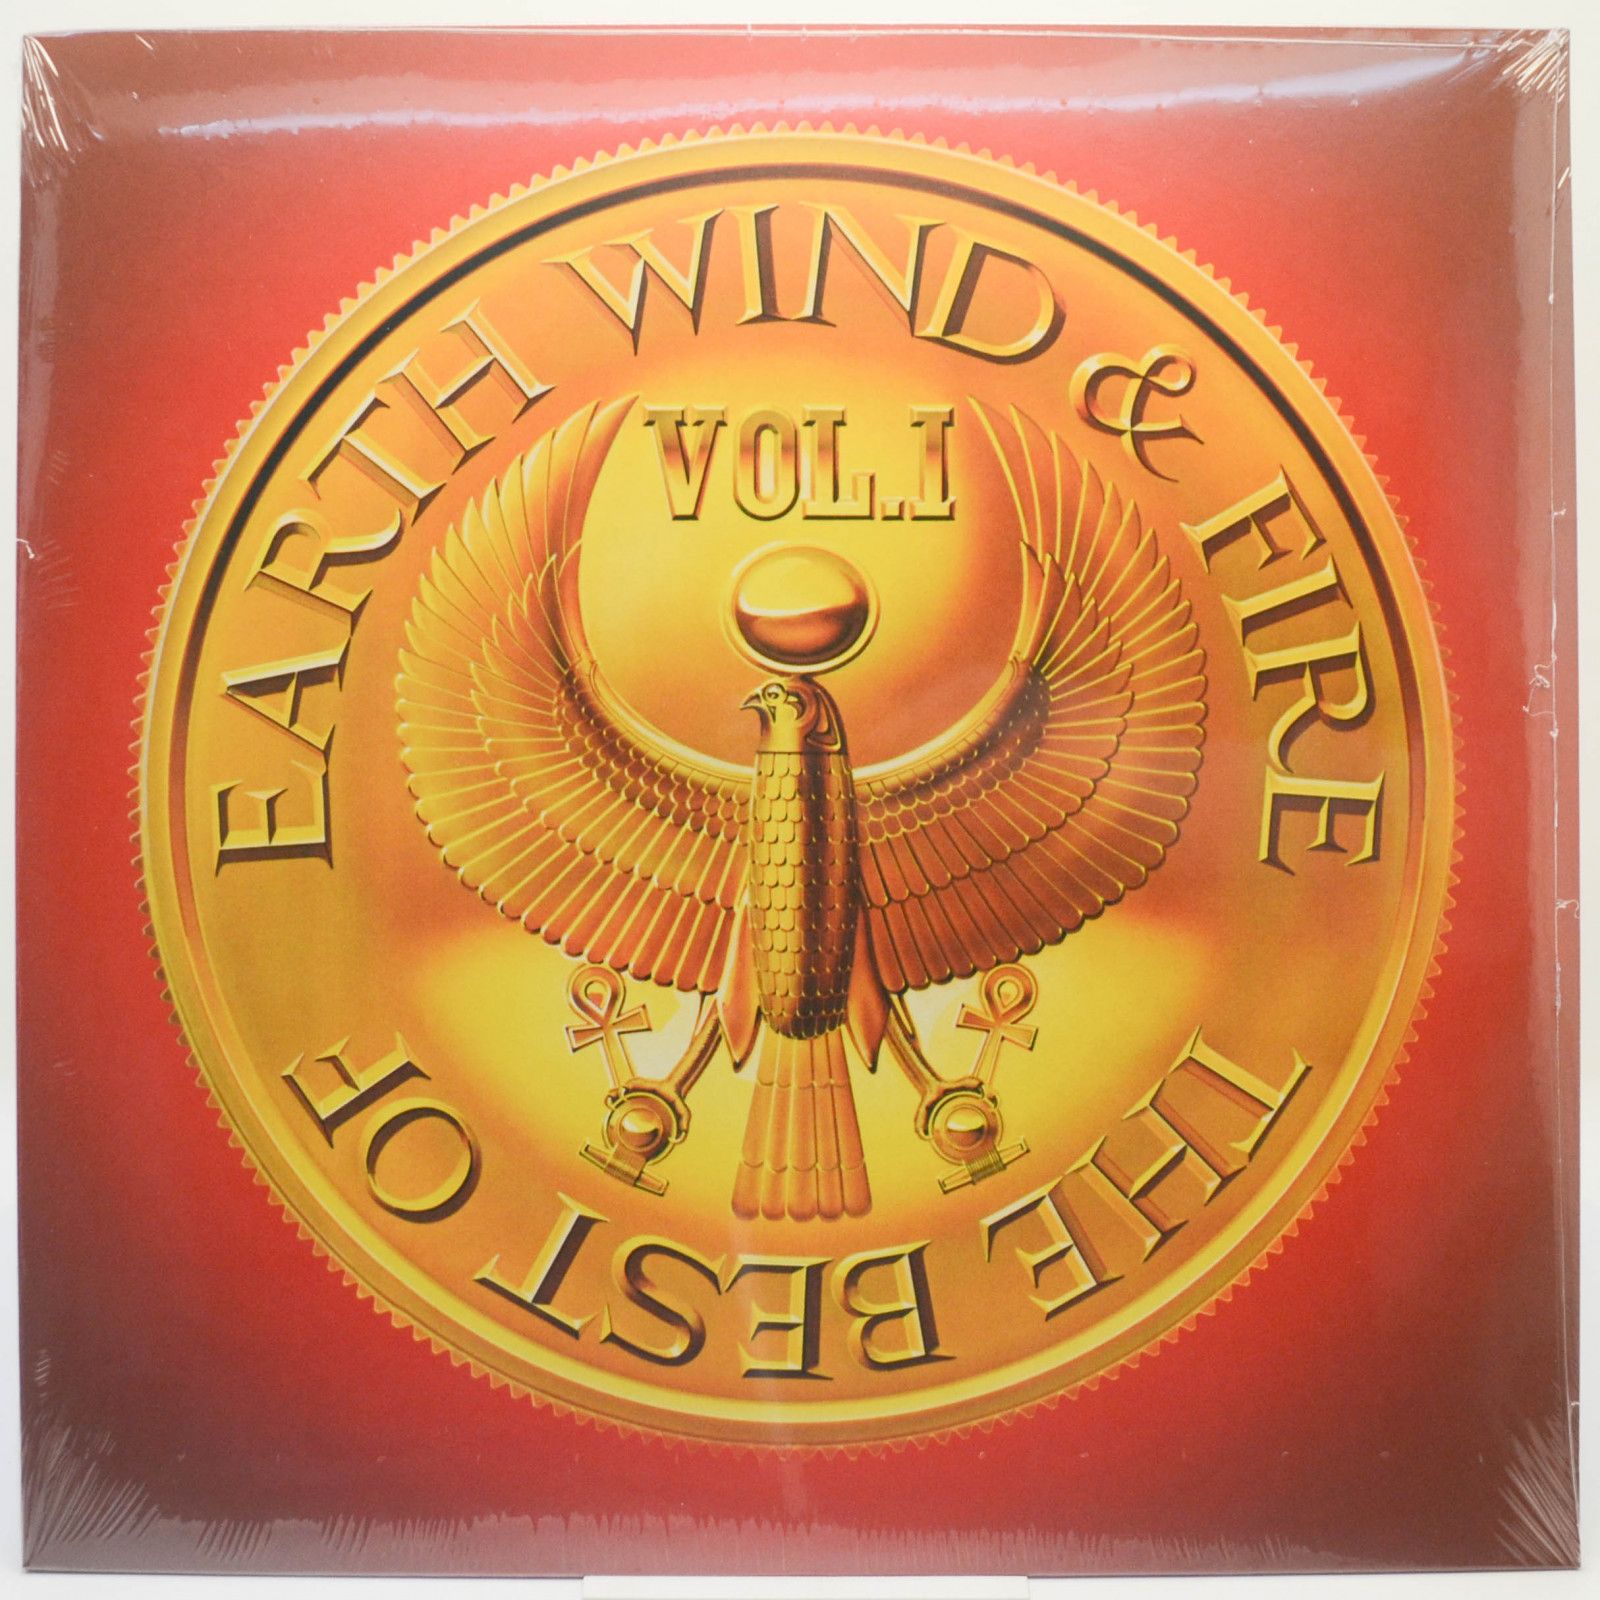 Earth, Wind & Fire — The Best Of Earth, Wind & Fire Vol. 1, 1978